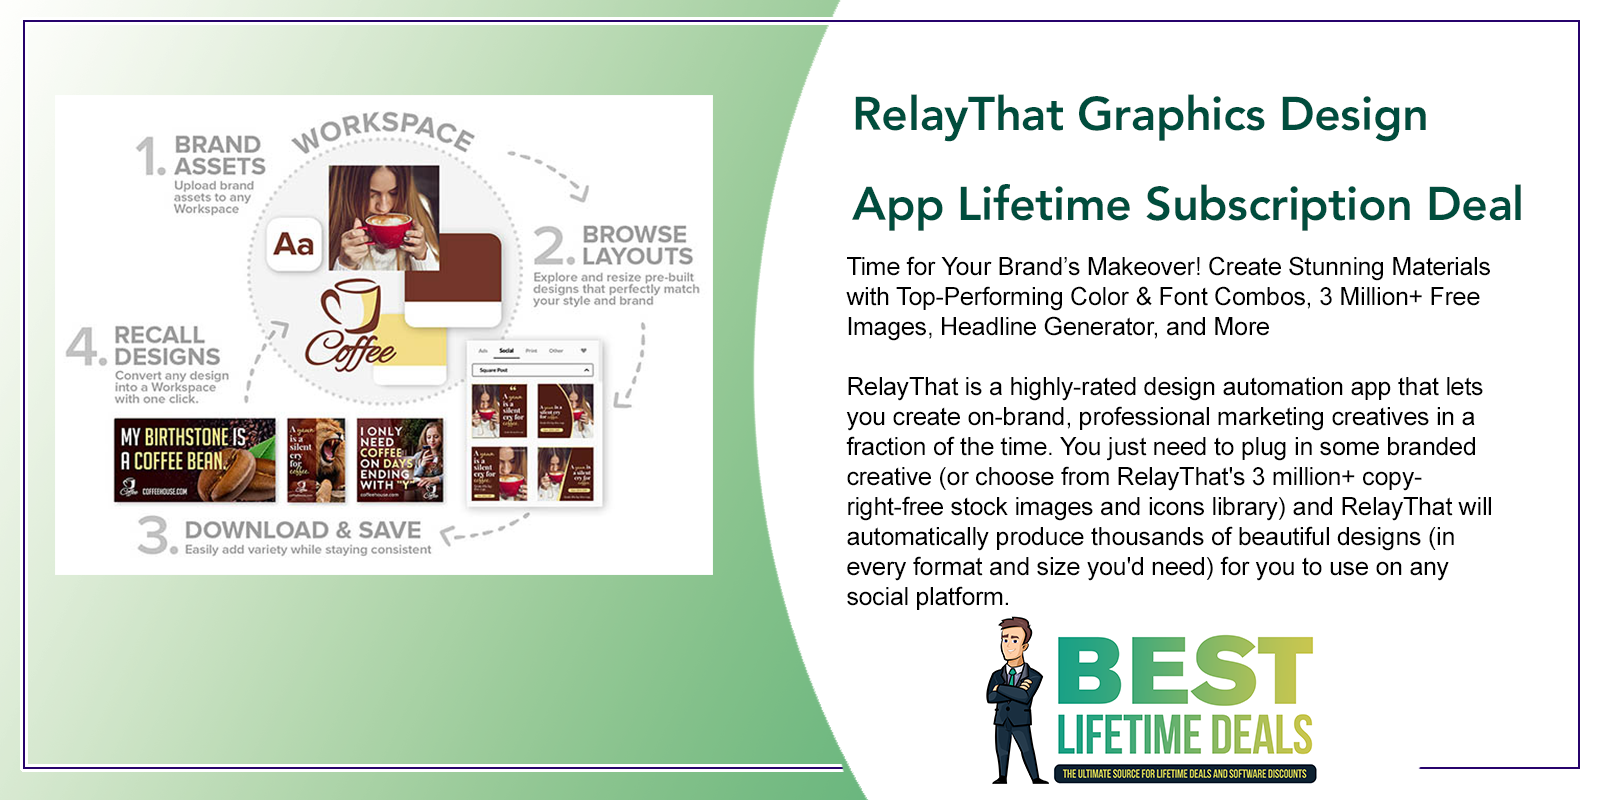 RelayThat Graphics Design App Lifetime Subscription Deal Featured Image